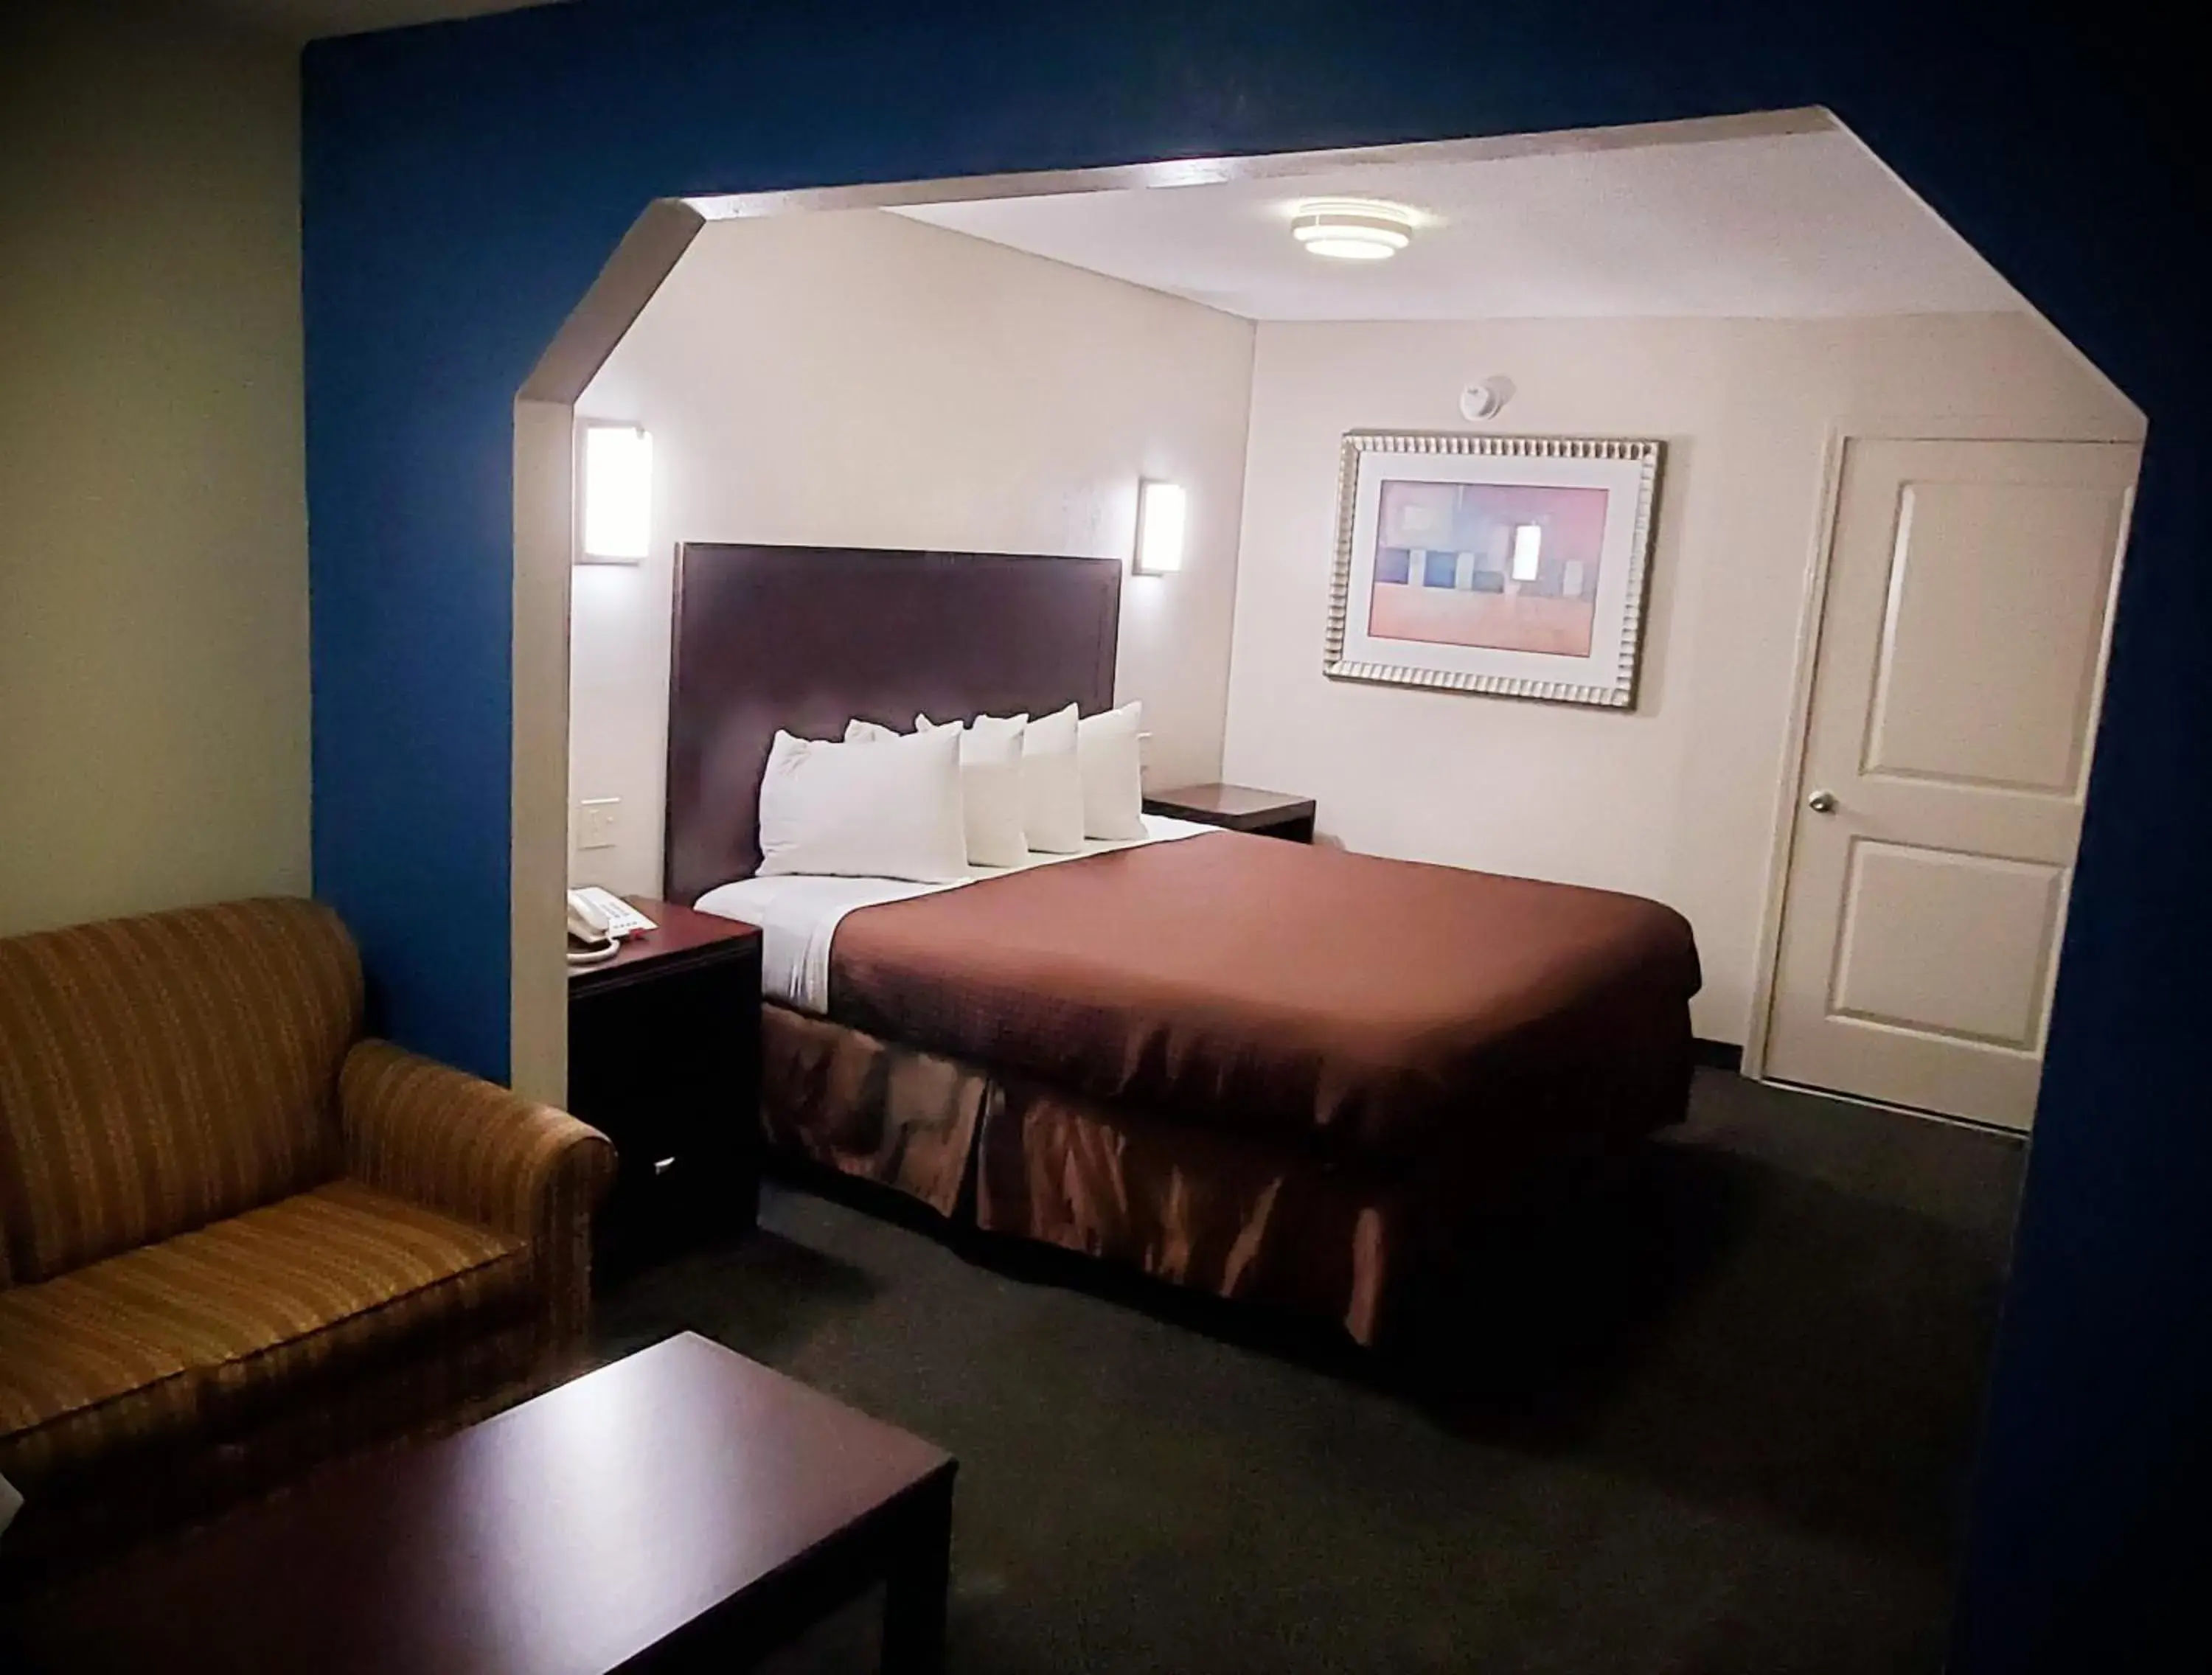 Bed in Executive Inn